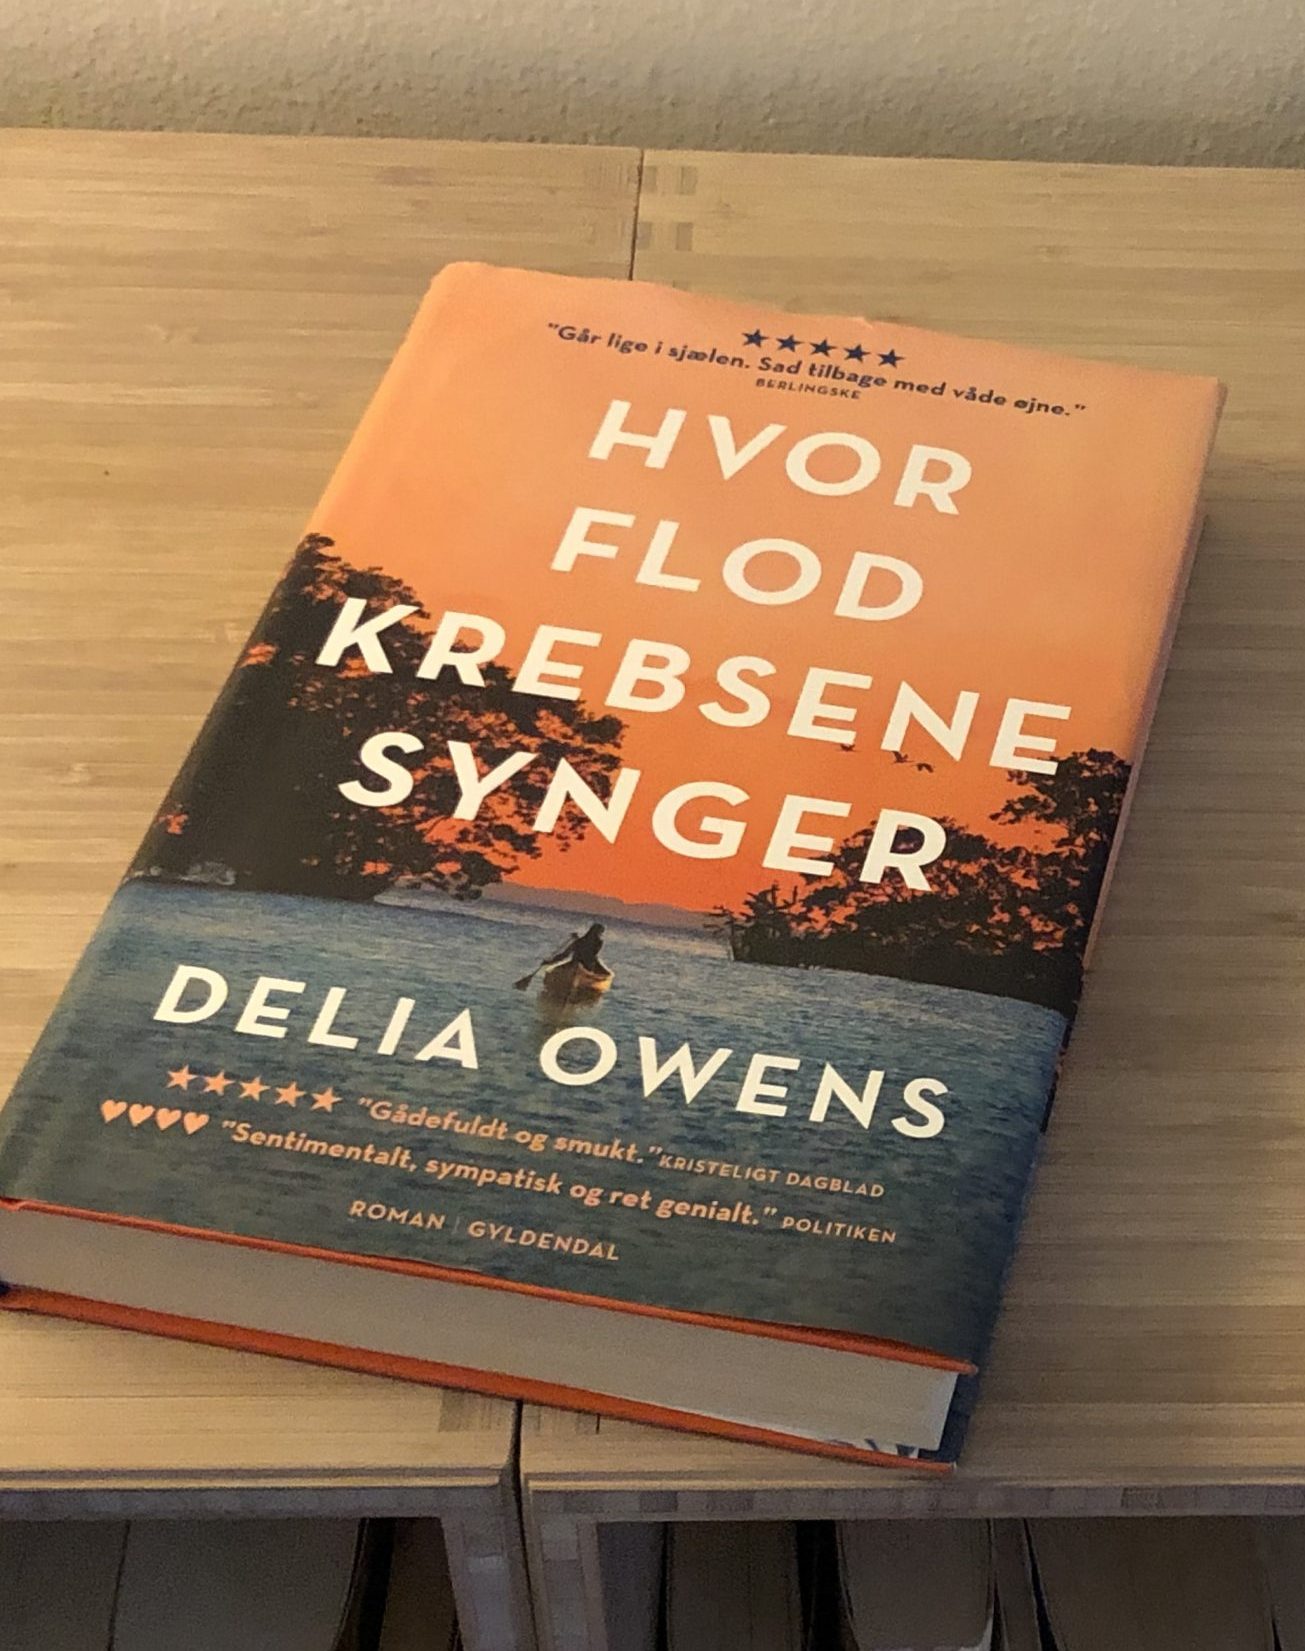 Delia Owens "Hvor flodkrebsene synger".